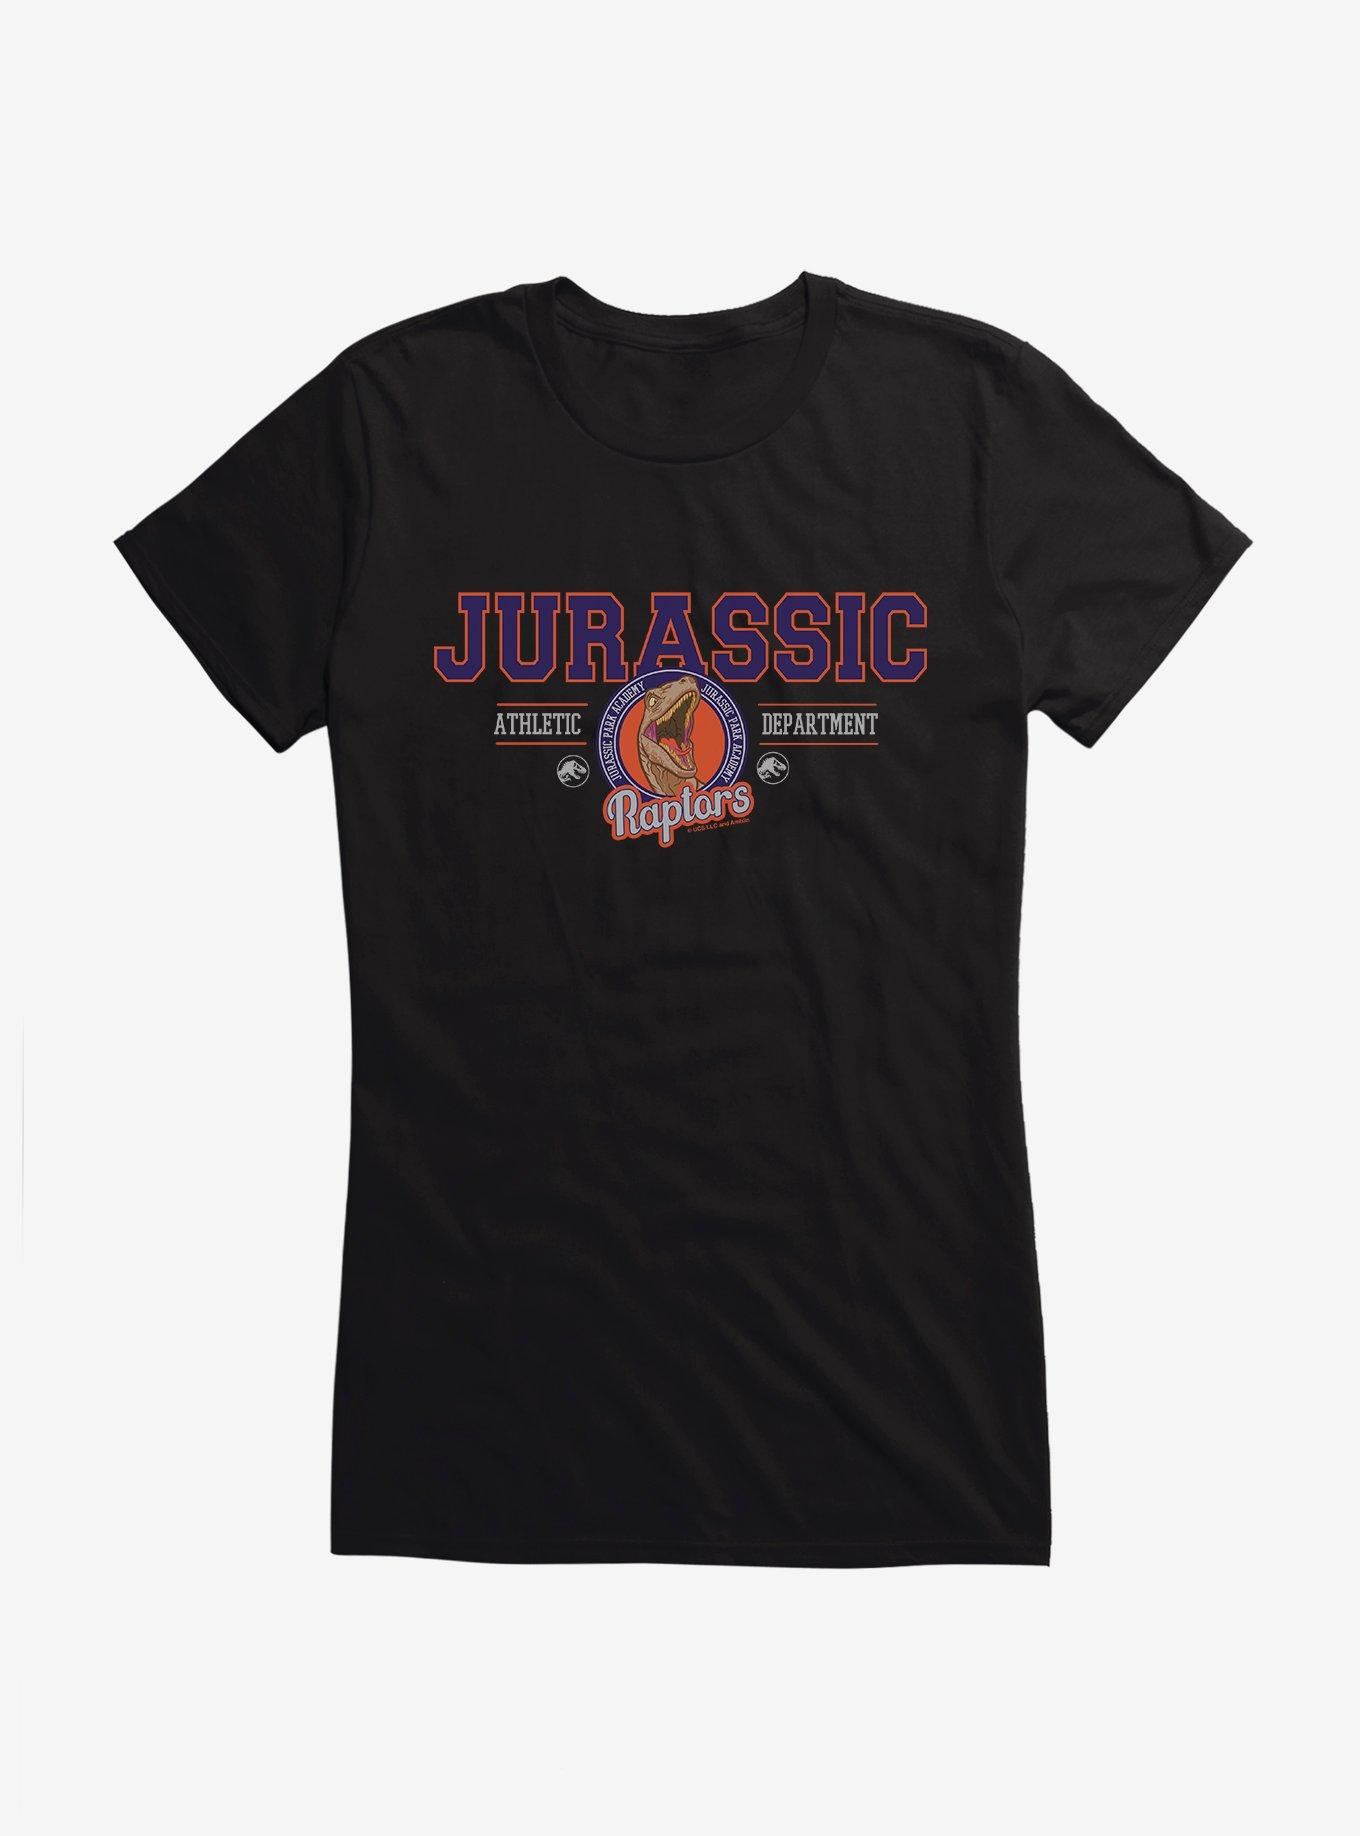 Jurassic Park Raptors Athletic Department Girls T-Shirt, , hi-res